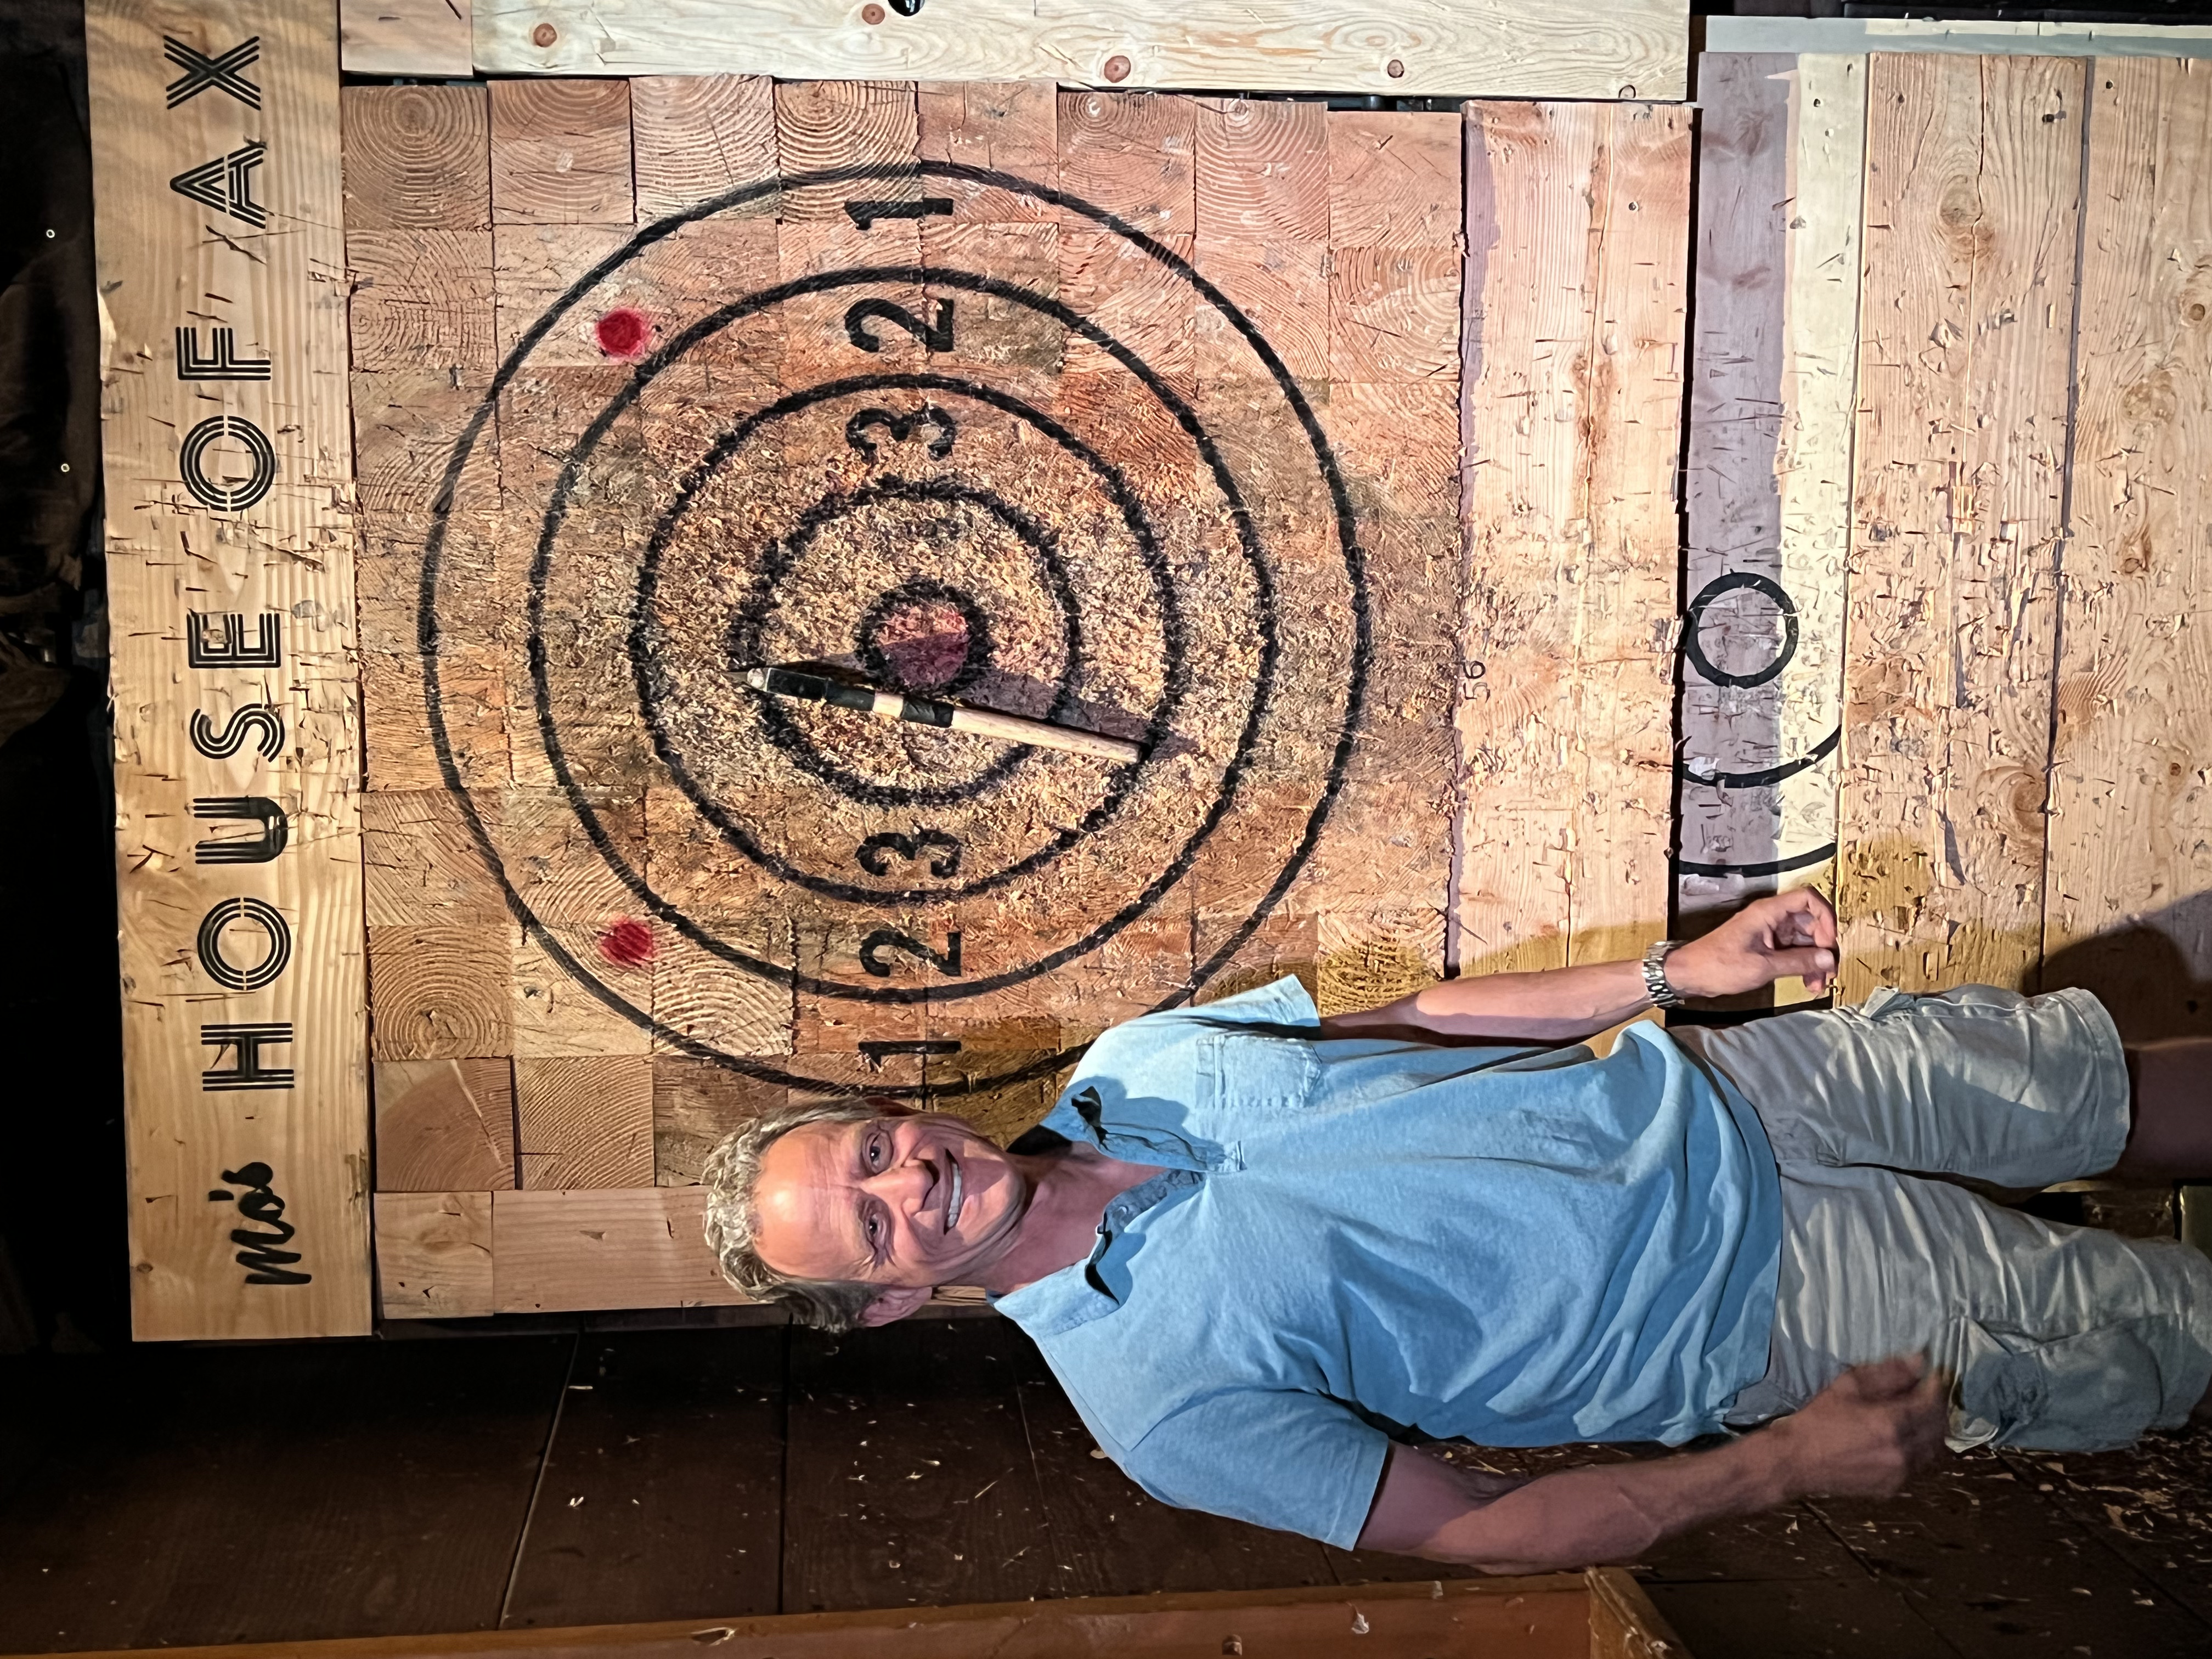 Gibbs standing next to an ax-throwing target